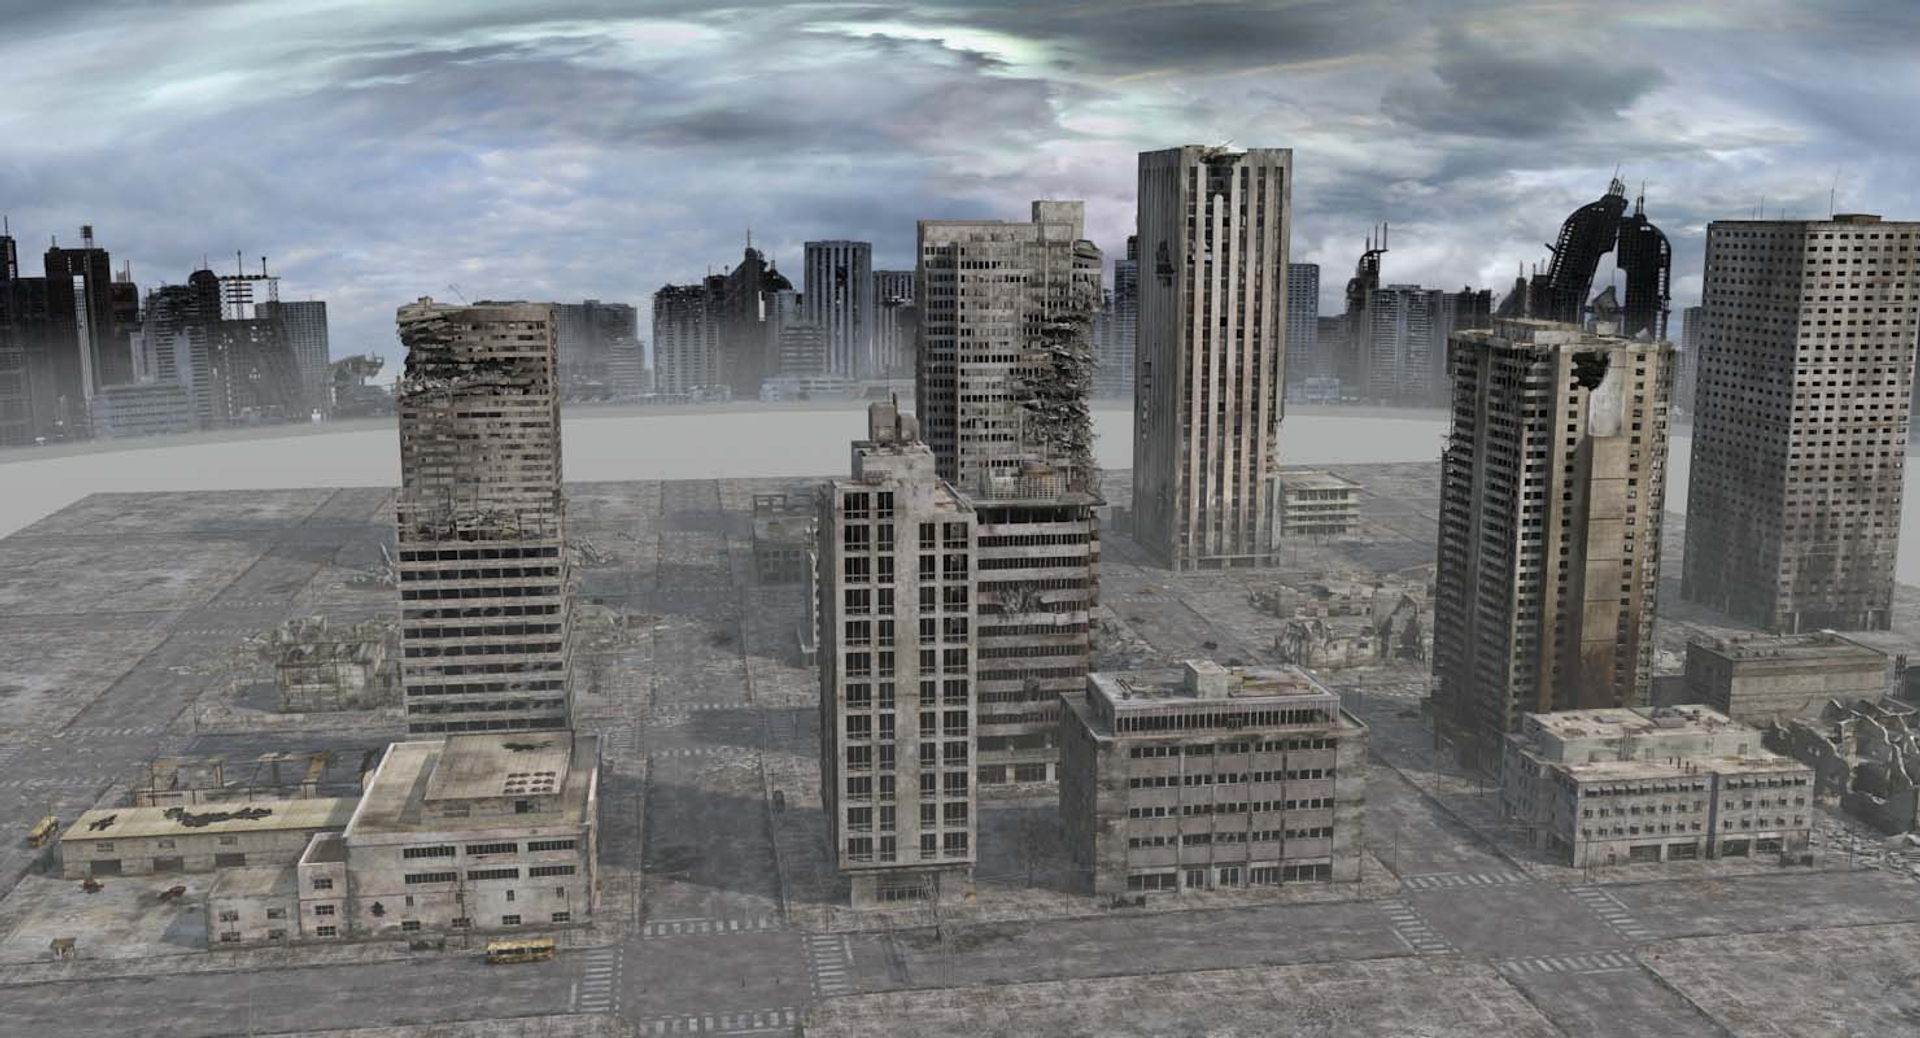 3d model of ruined city destroyed buildings https://p.turbosquid.com/ts-thumb/zw/ydHzAl/Fncd2rxQ/rcitturn/jpg/1469821574/1920x1080/turn_fit_q99/a1970090f3c8f0a2bfe0a773e4b20316d69111b4/rcitturn-1.jpg